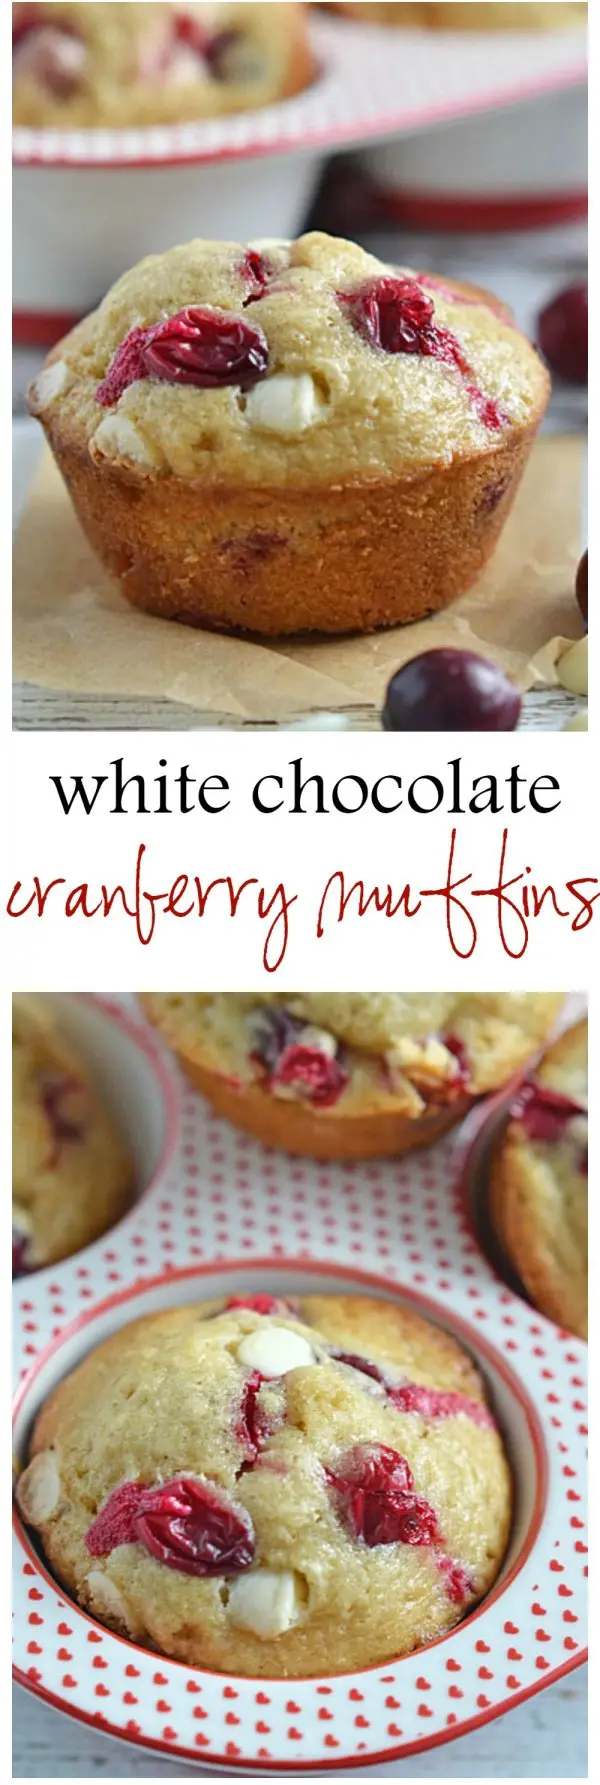 White Chocolate Cranberry Muffins